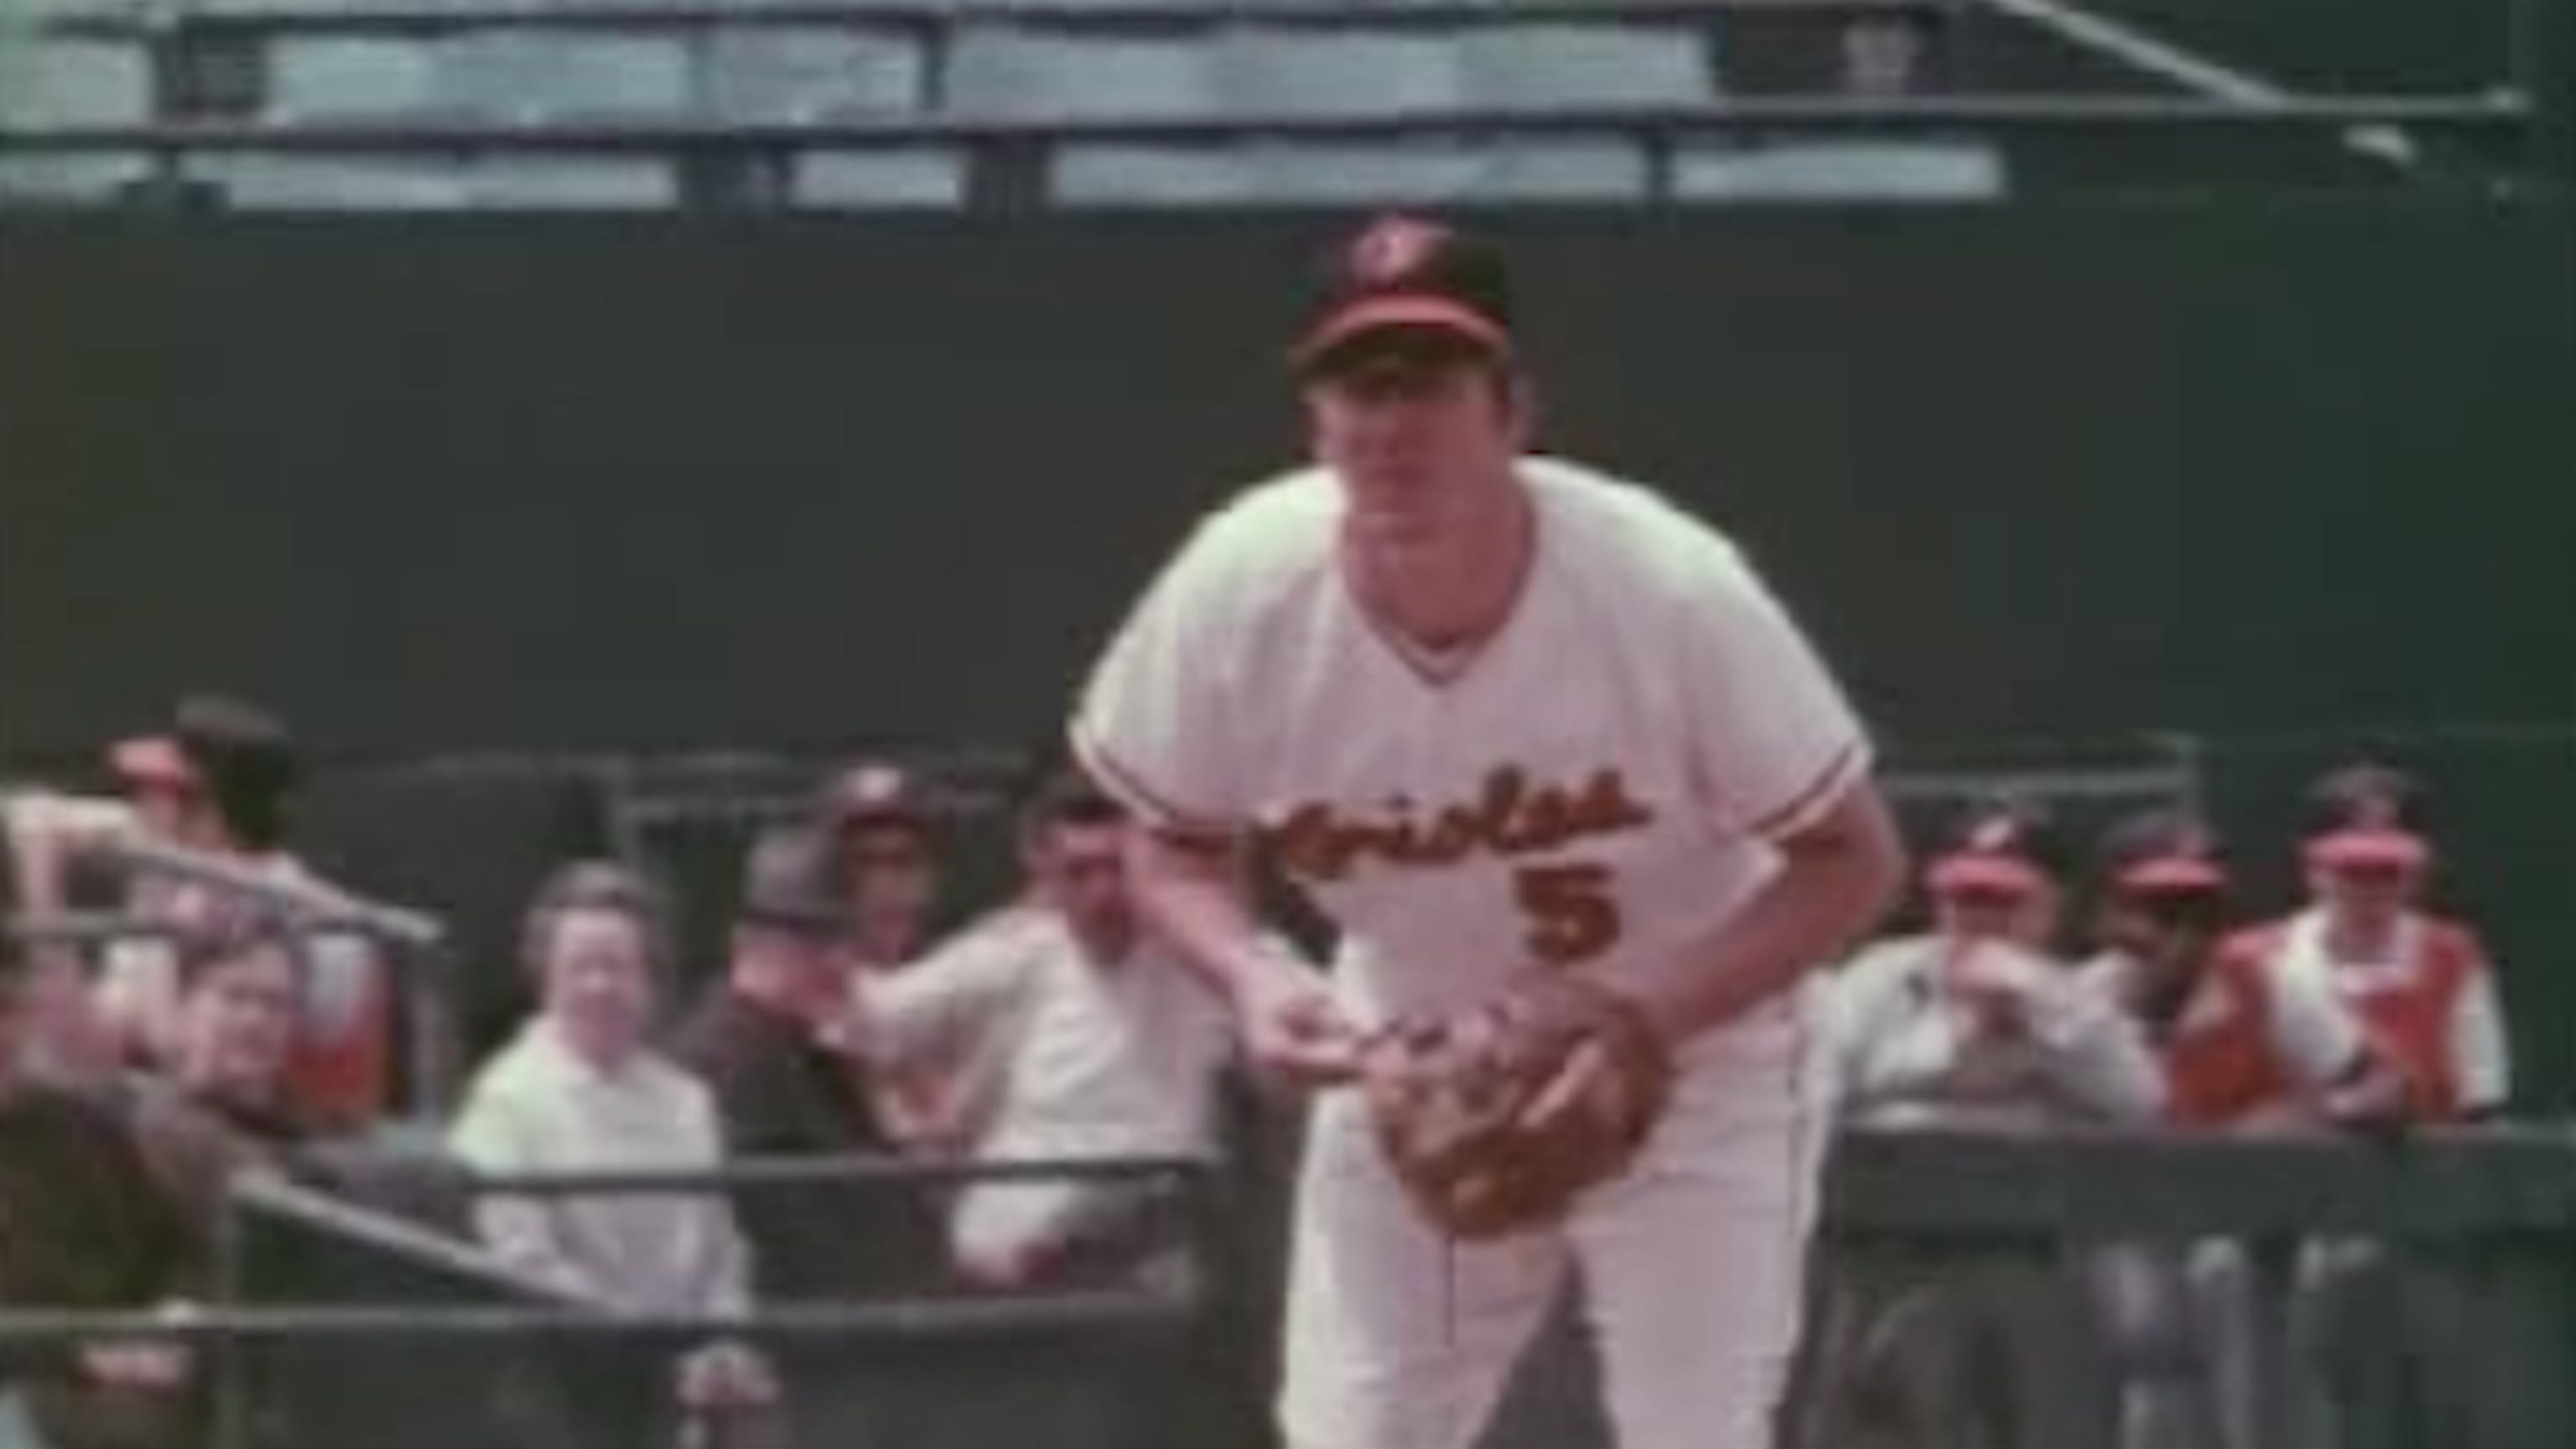 Orioles' star third baseman Brooks Robinson dies at 86 - The Japan